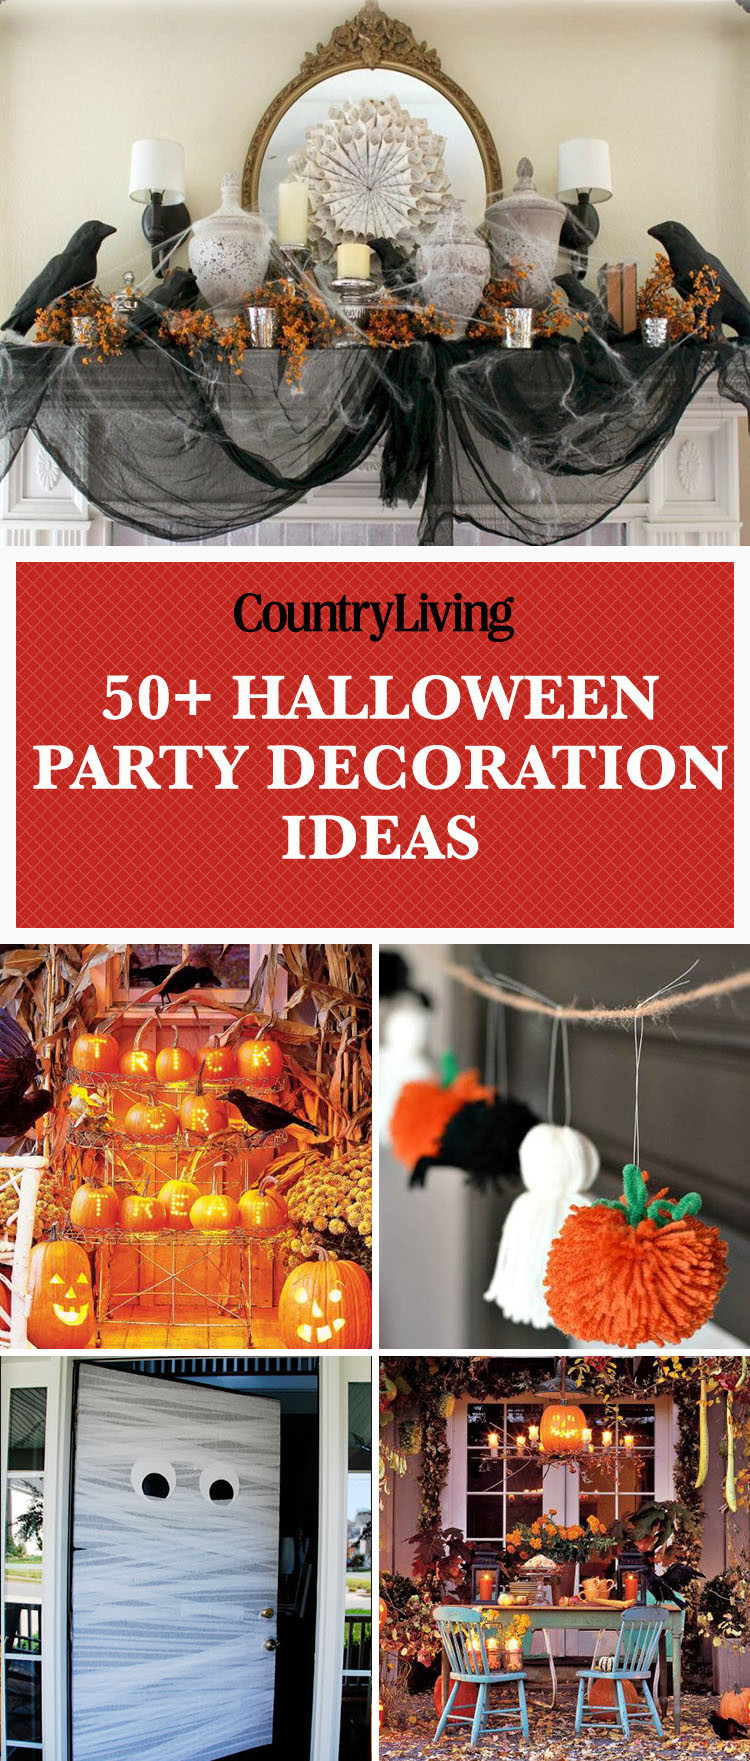 Halloween Birthday Party Decoration Ideas
 56 Fun Halloween Party Decorating Ideas Spooky Halloween